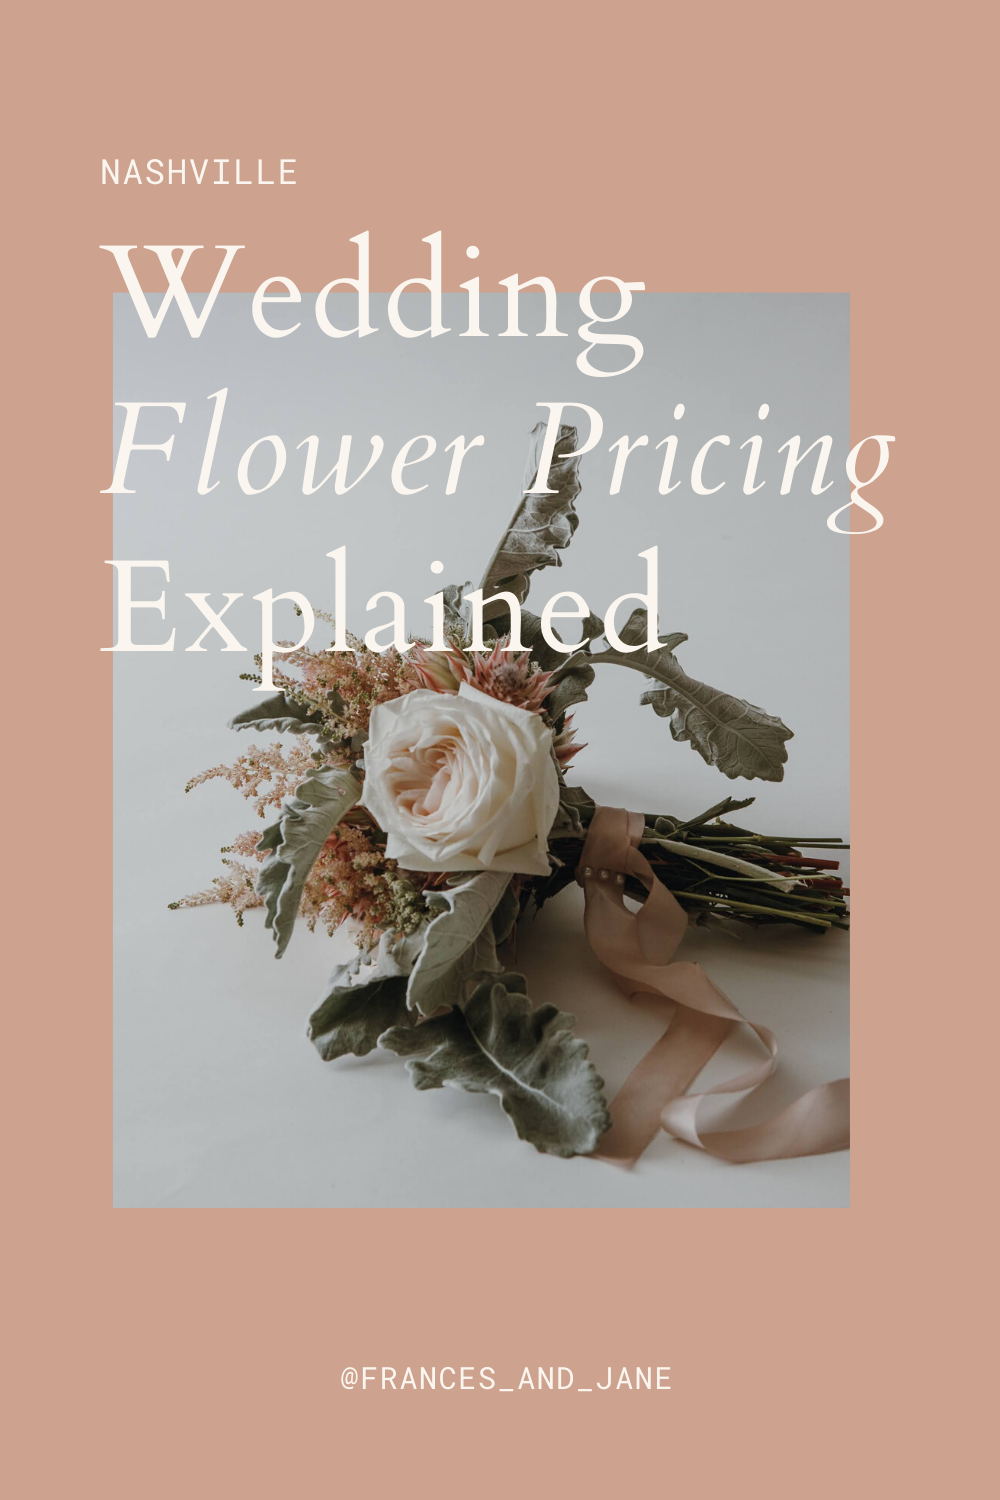 Nashville wedding flower pricing explained